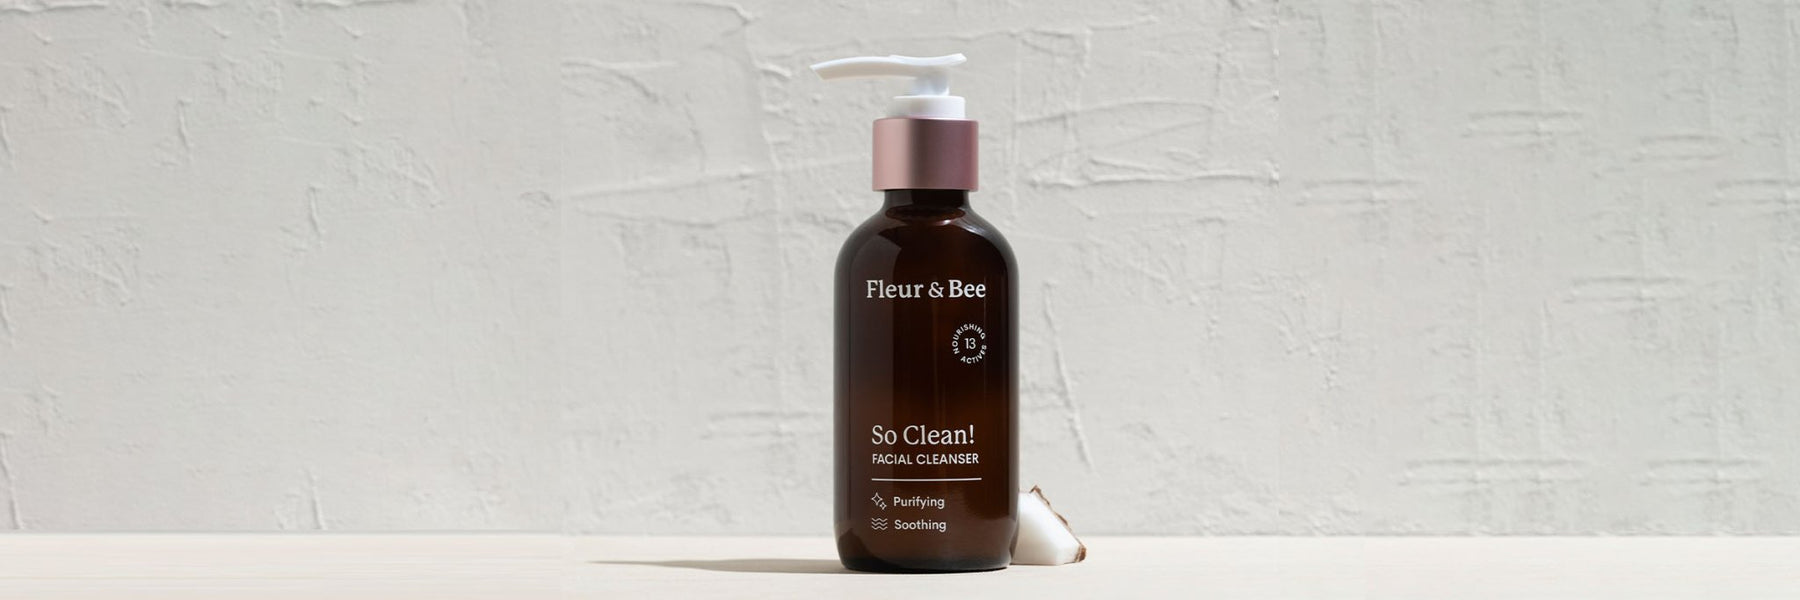 So Clean!: Natural Facial Cleanser by Fleur & Bee